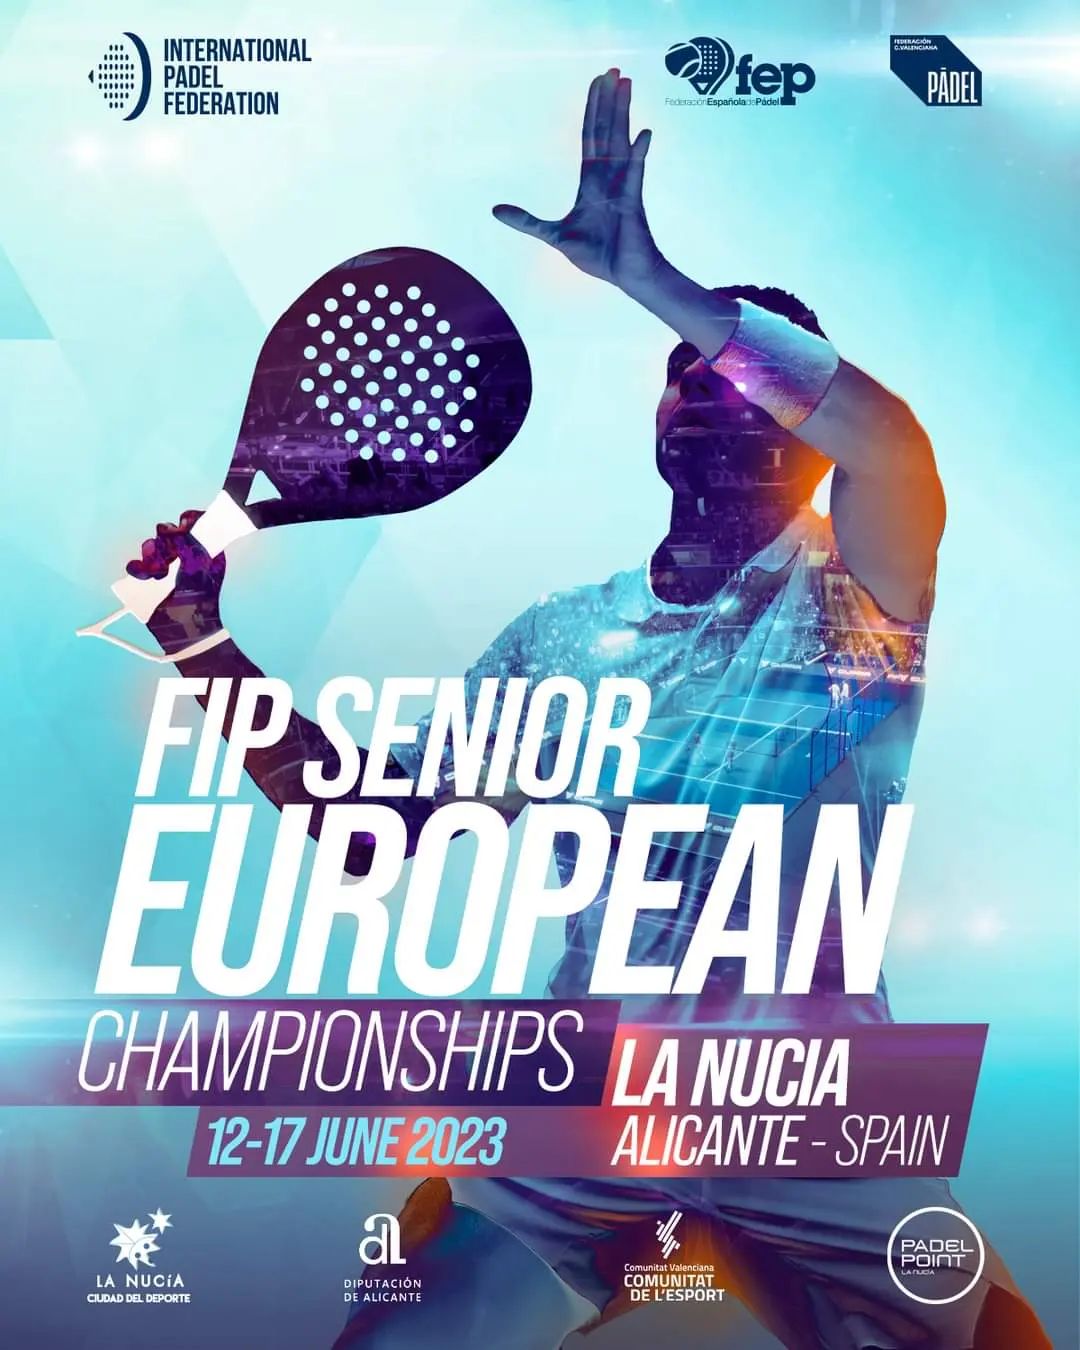 FIP Senior European Championships